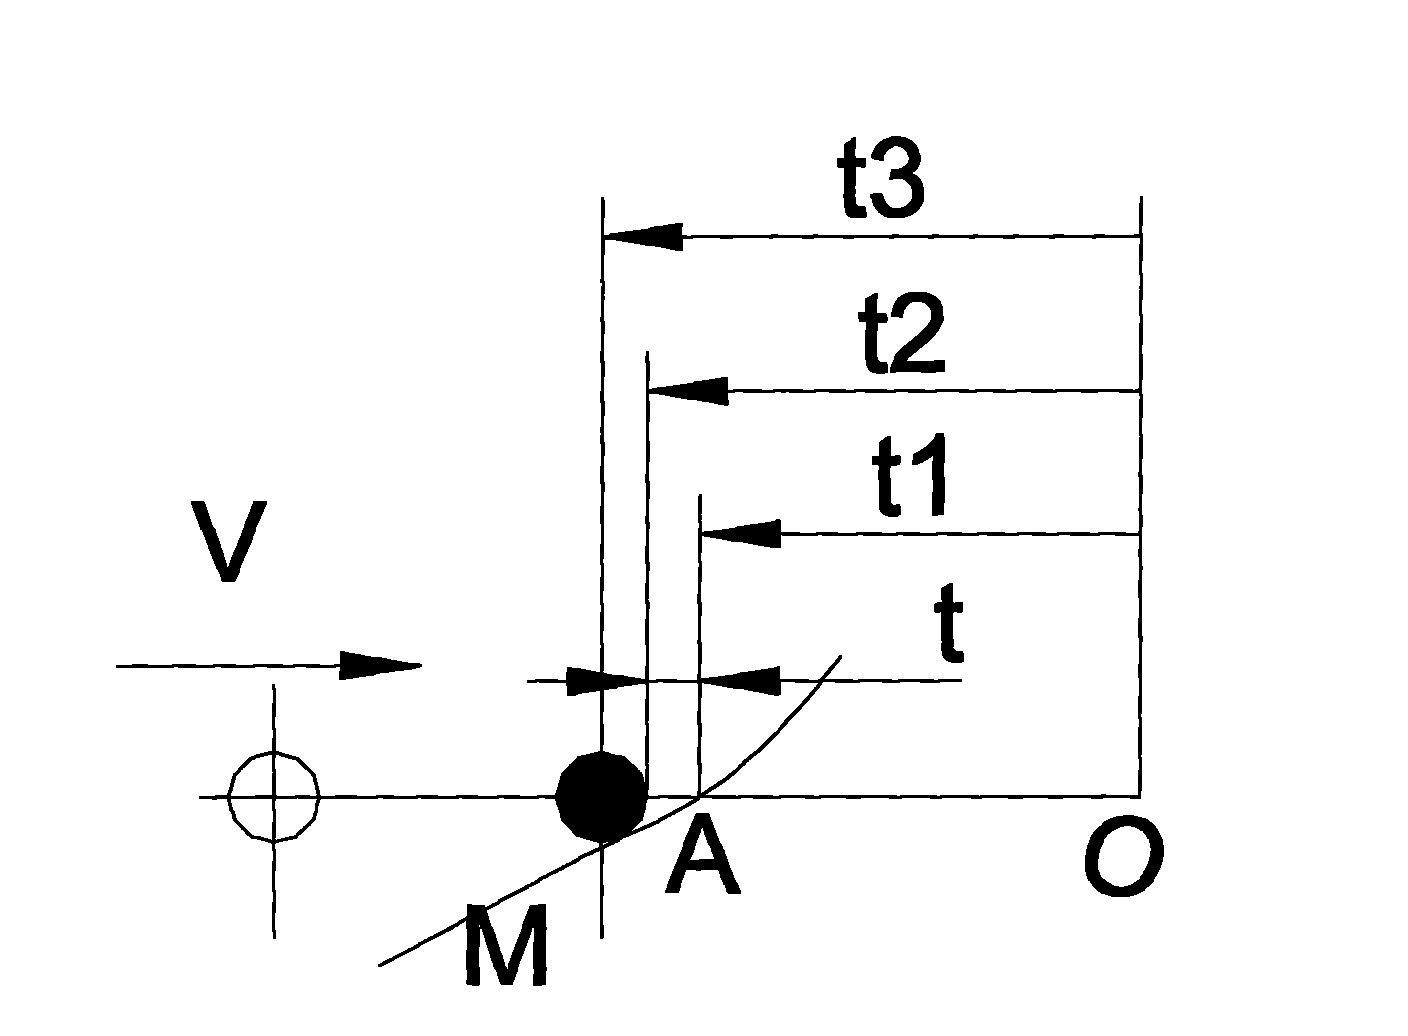 Identical graduation method for measuring contour curve of Archimedes screw cam